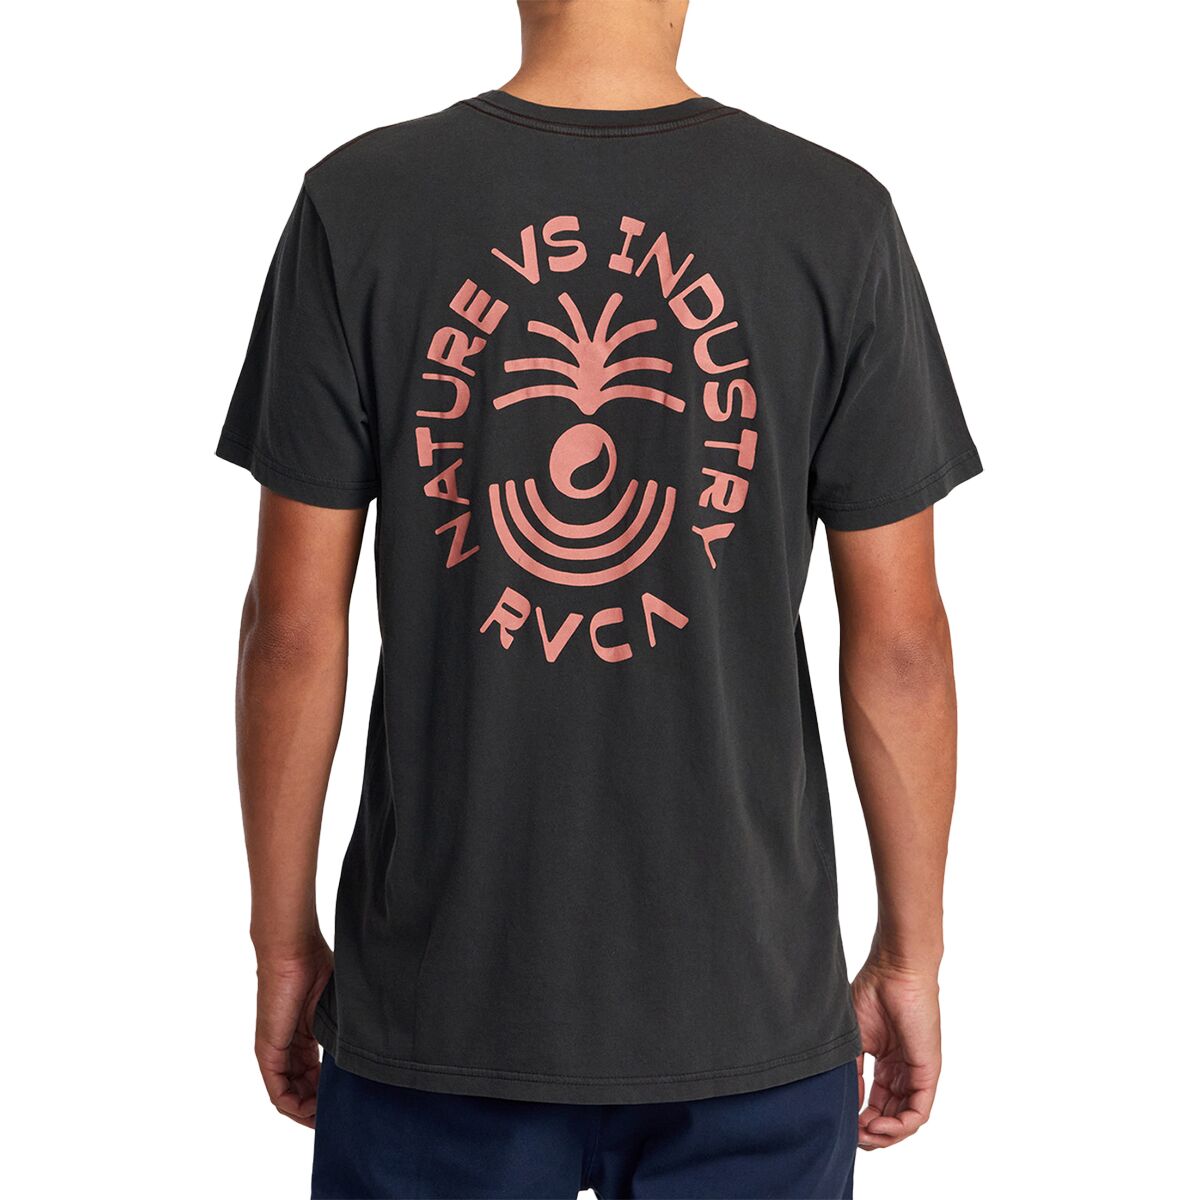 RVCA Yucca Heights T-Shirt - Men's